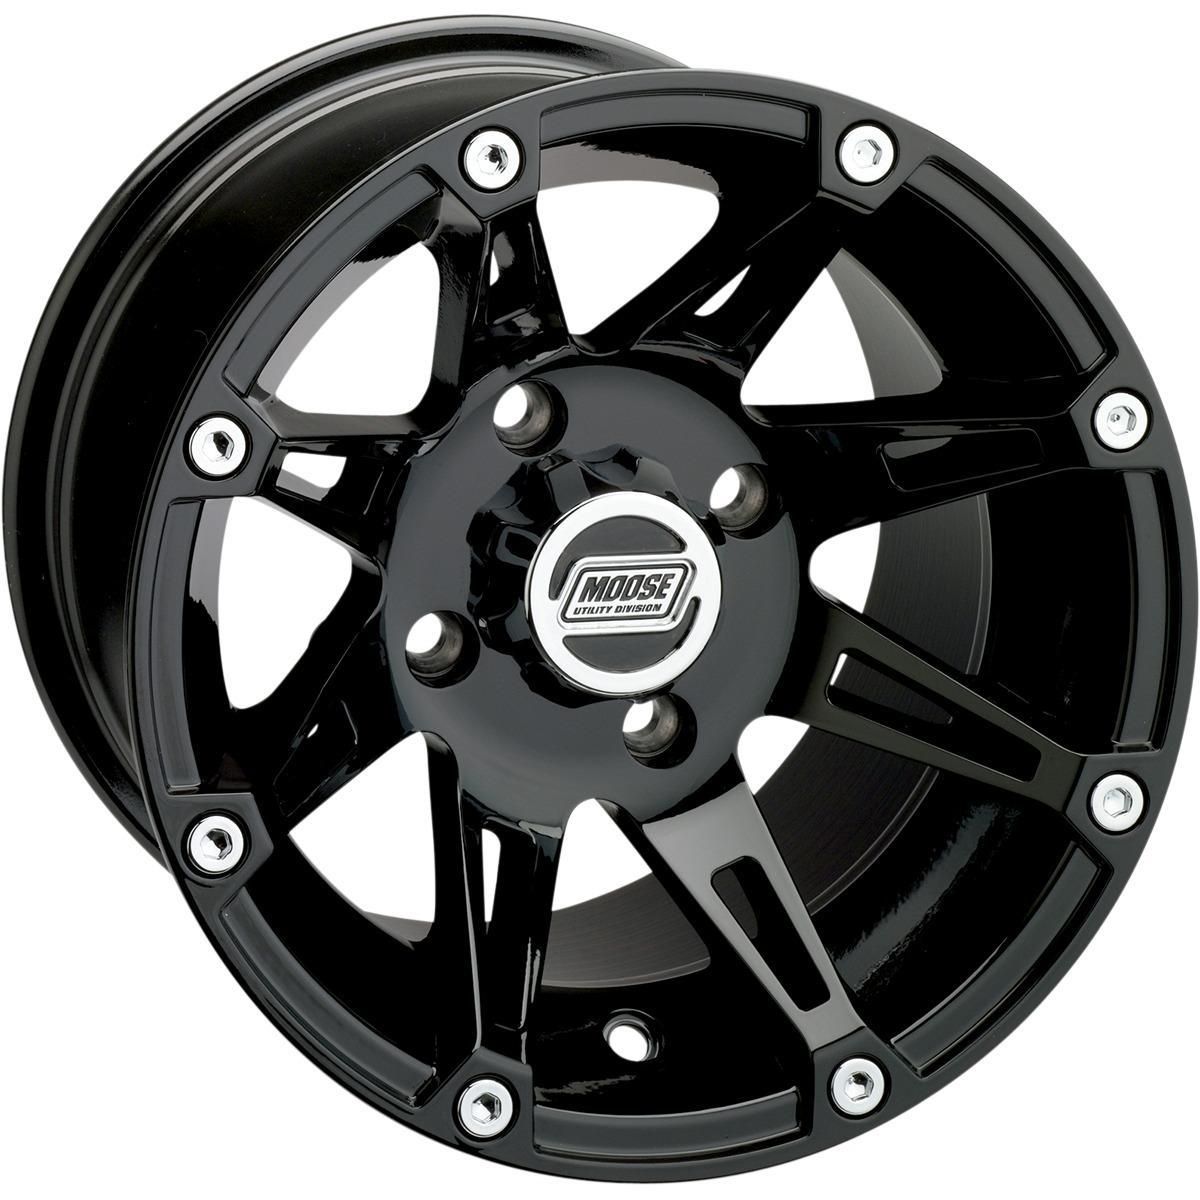 7ZS-MOOSE-UTILI-02300453 Type 387X Rear Wheel - 12x8 - 4+4 Offset - 4/136 - Black